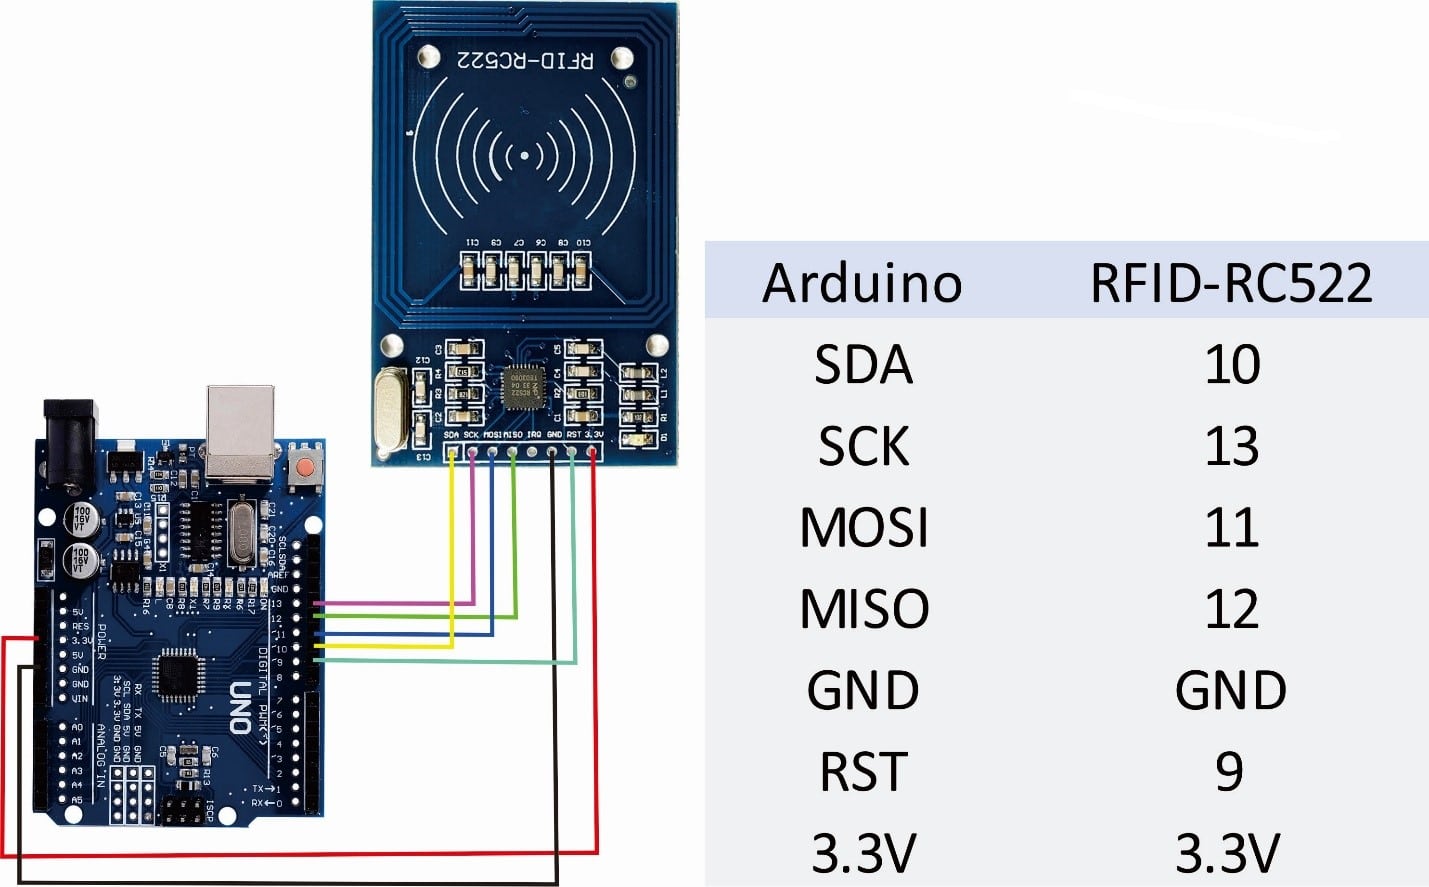 RFID connection diagram